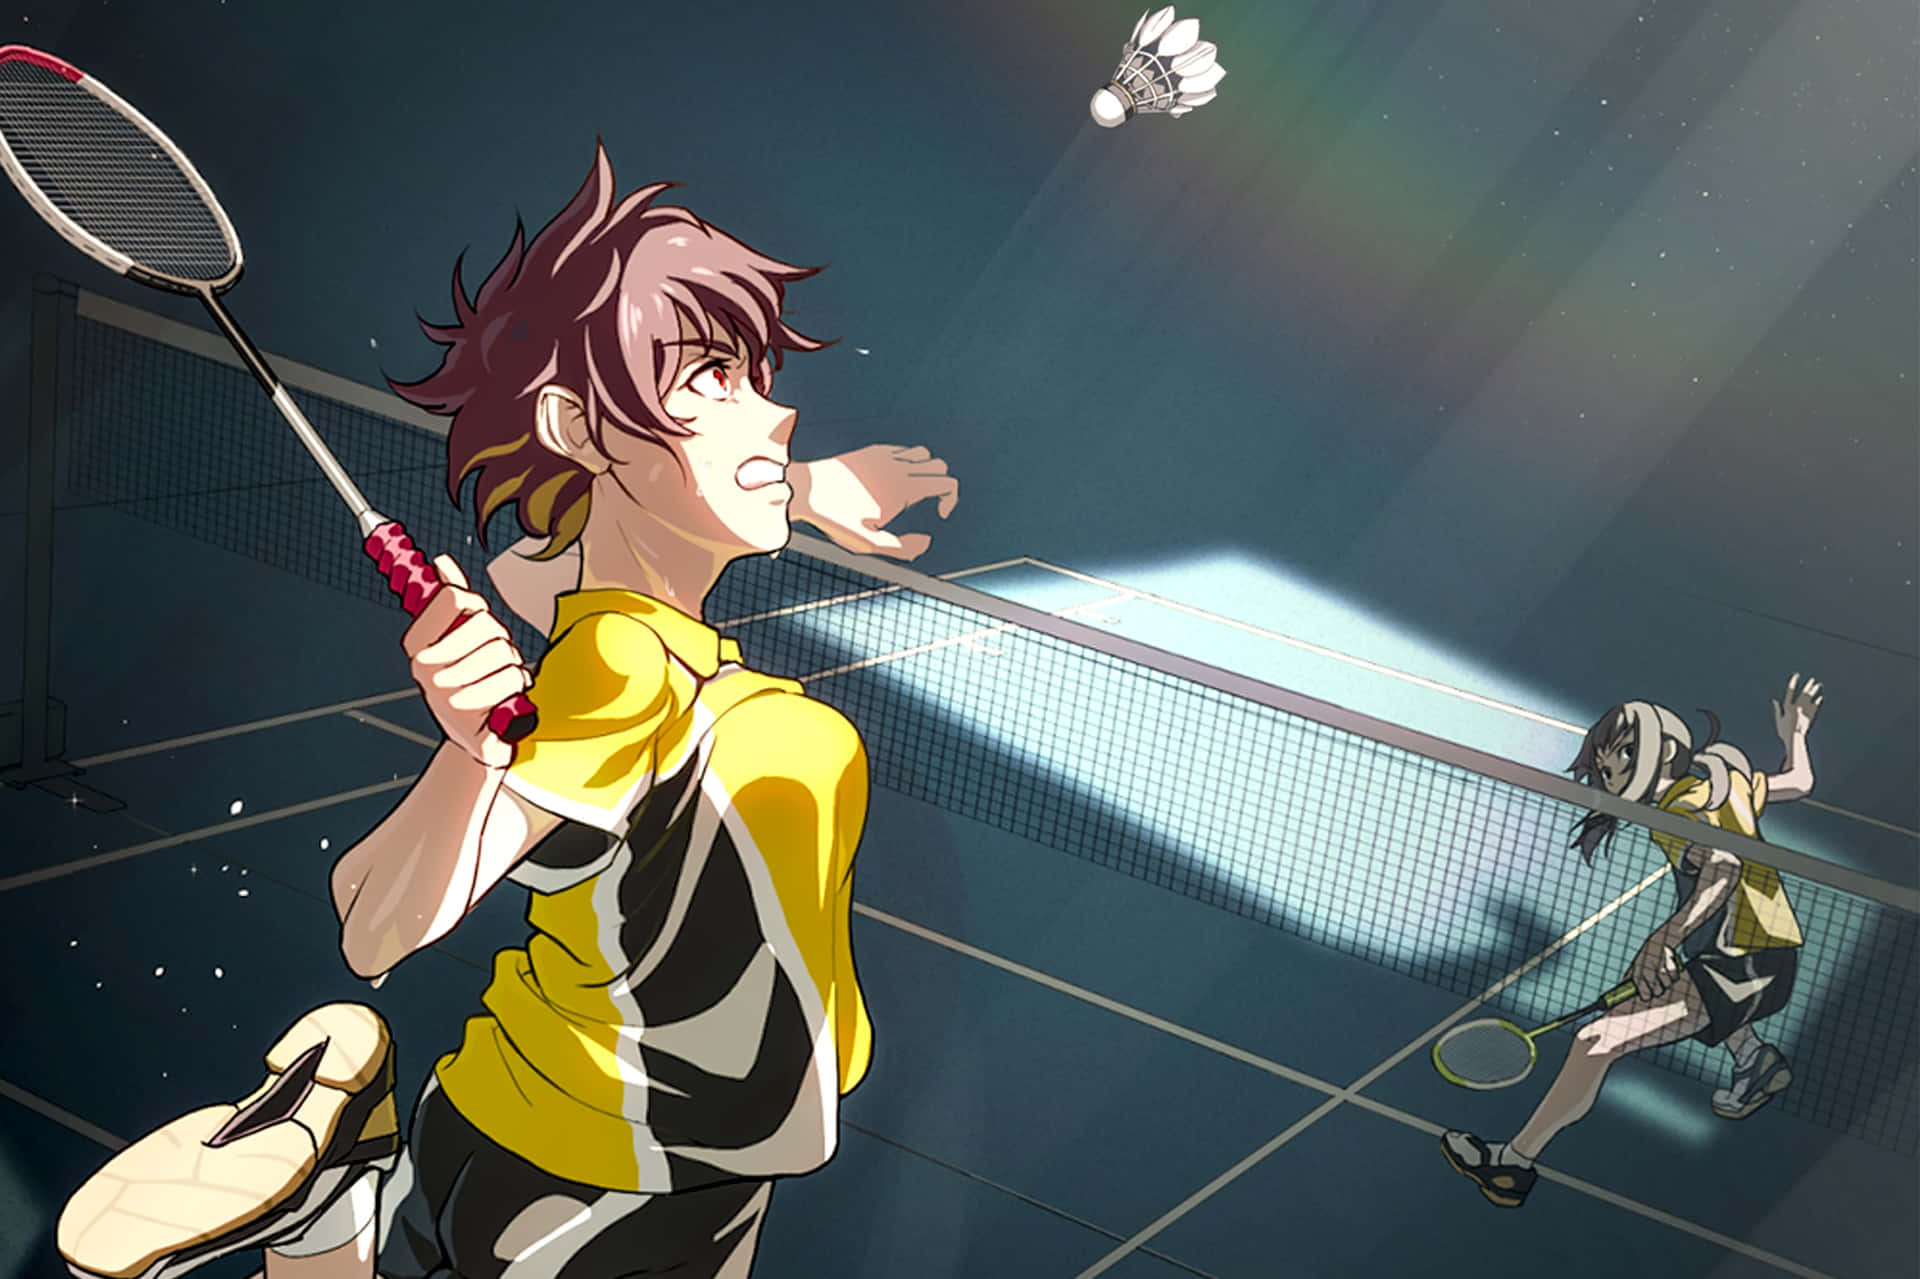 Badmintonbakgrundsbild